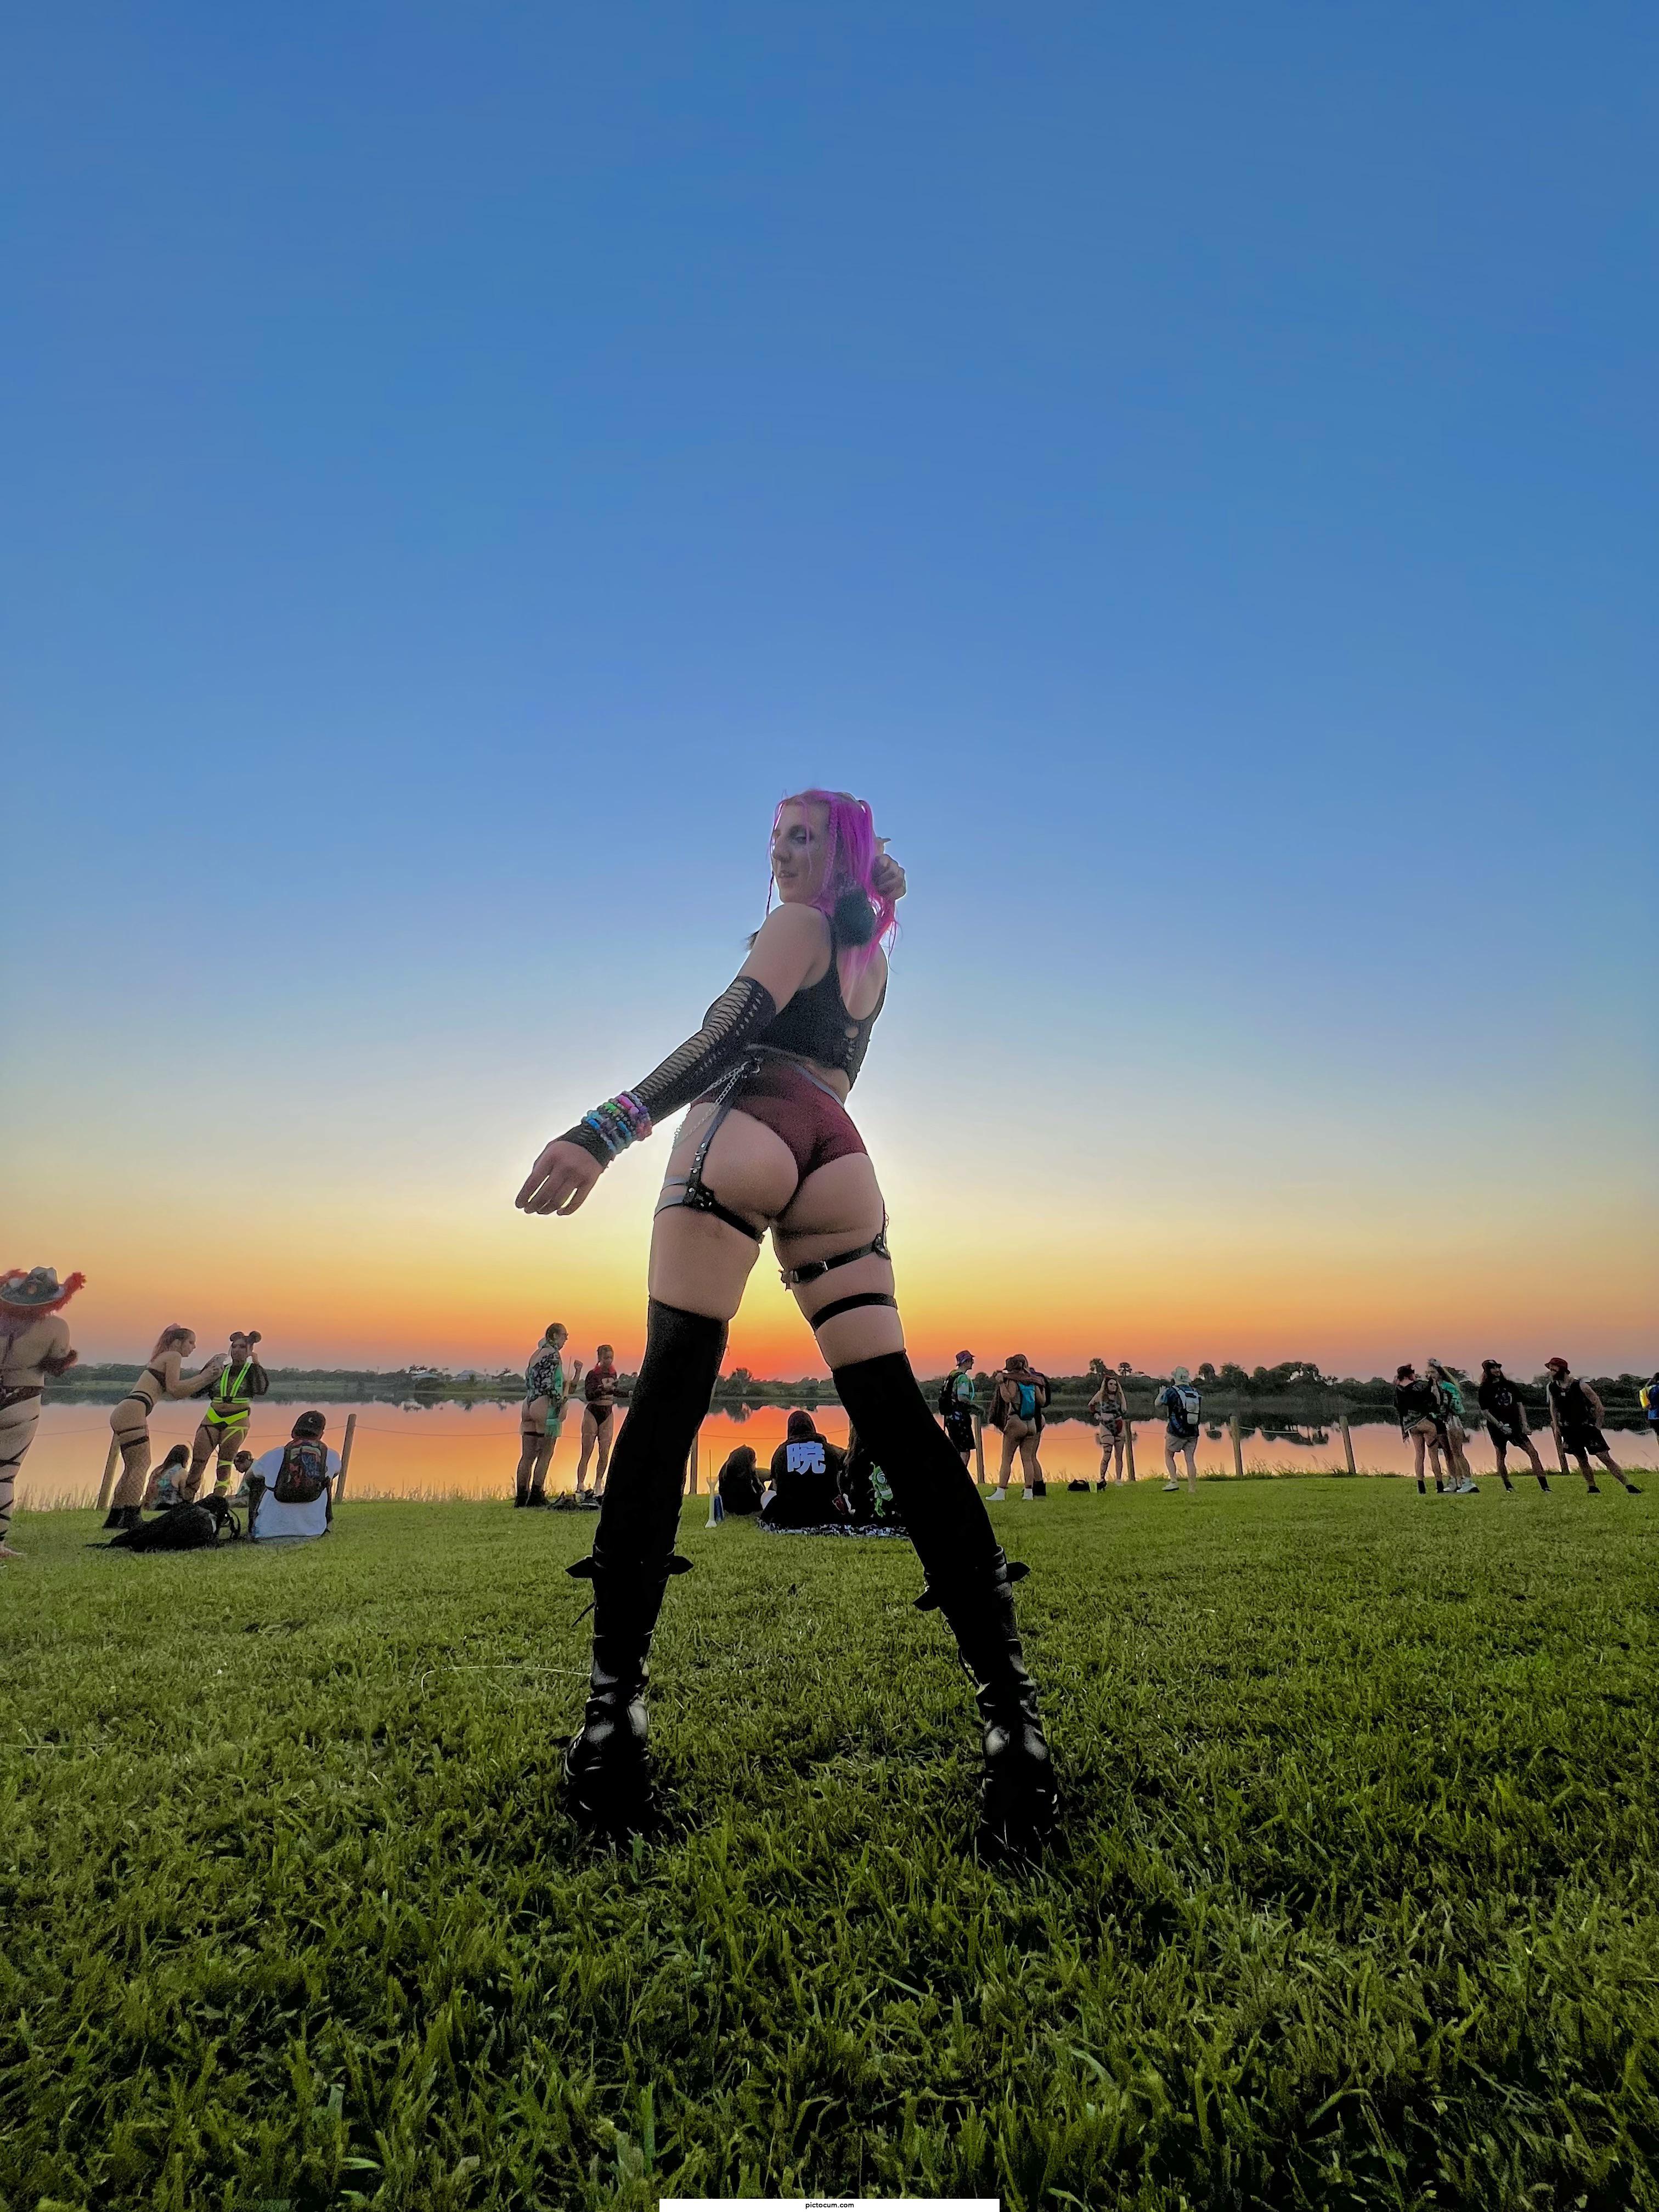 Ass, a pretty sunset, and bass music. Doesn’t get much better than that